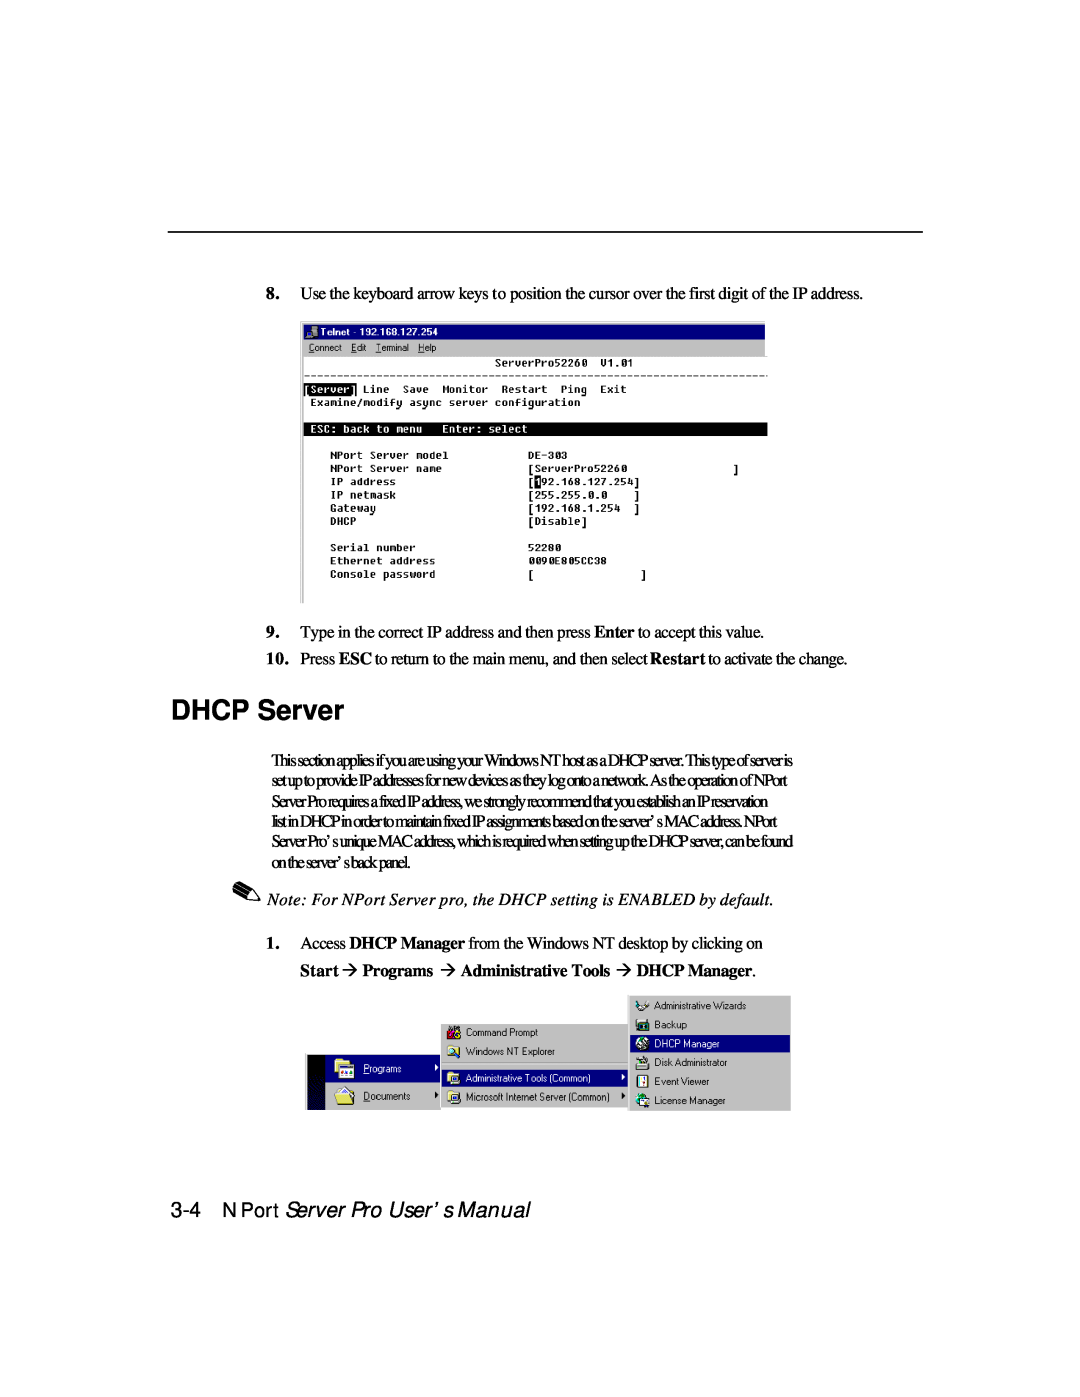 Moxa Technologies DE-303, DE-308 manual DHCP Server, NPort Server Pro User’s Manual 